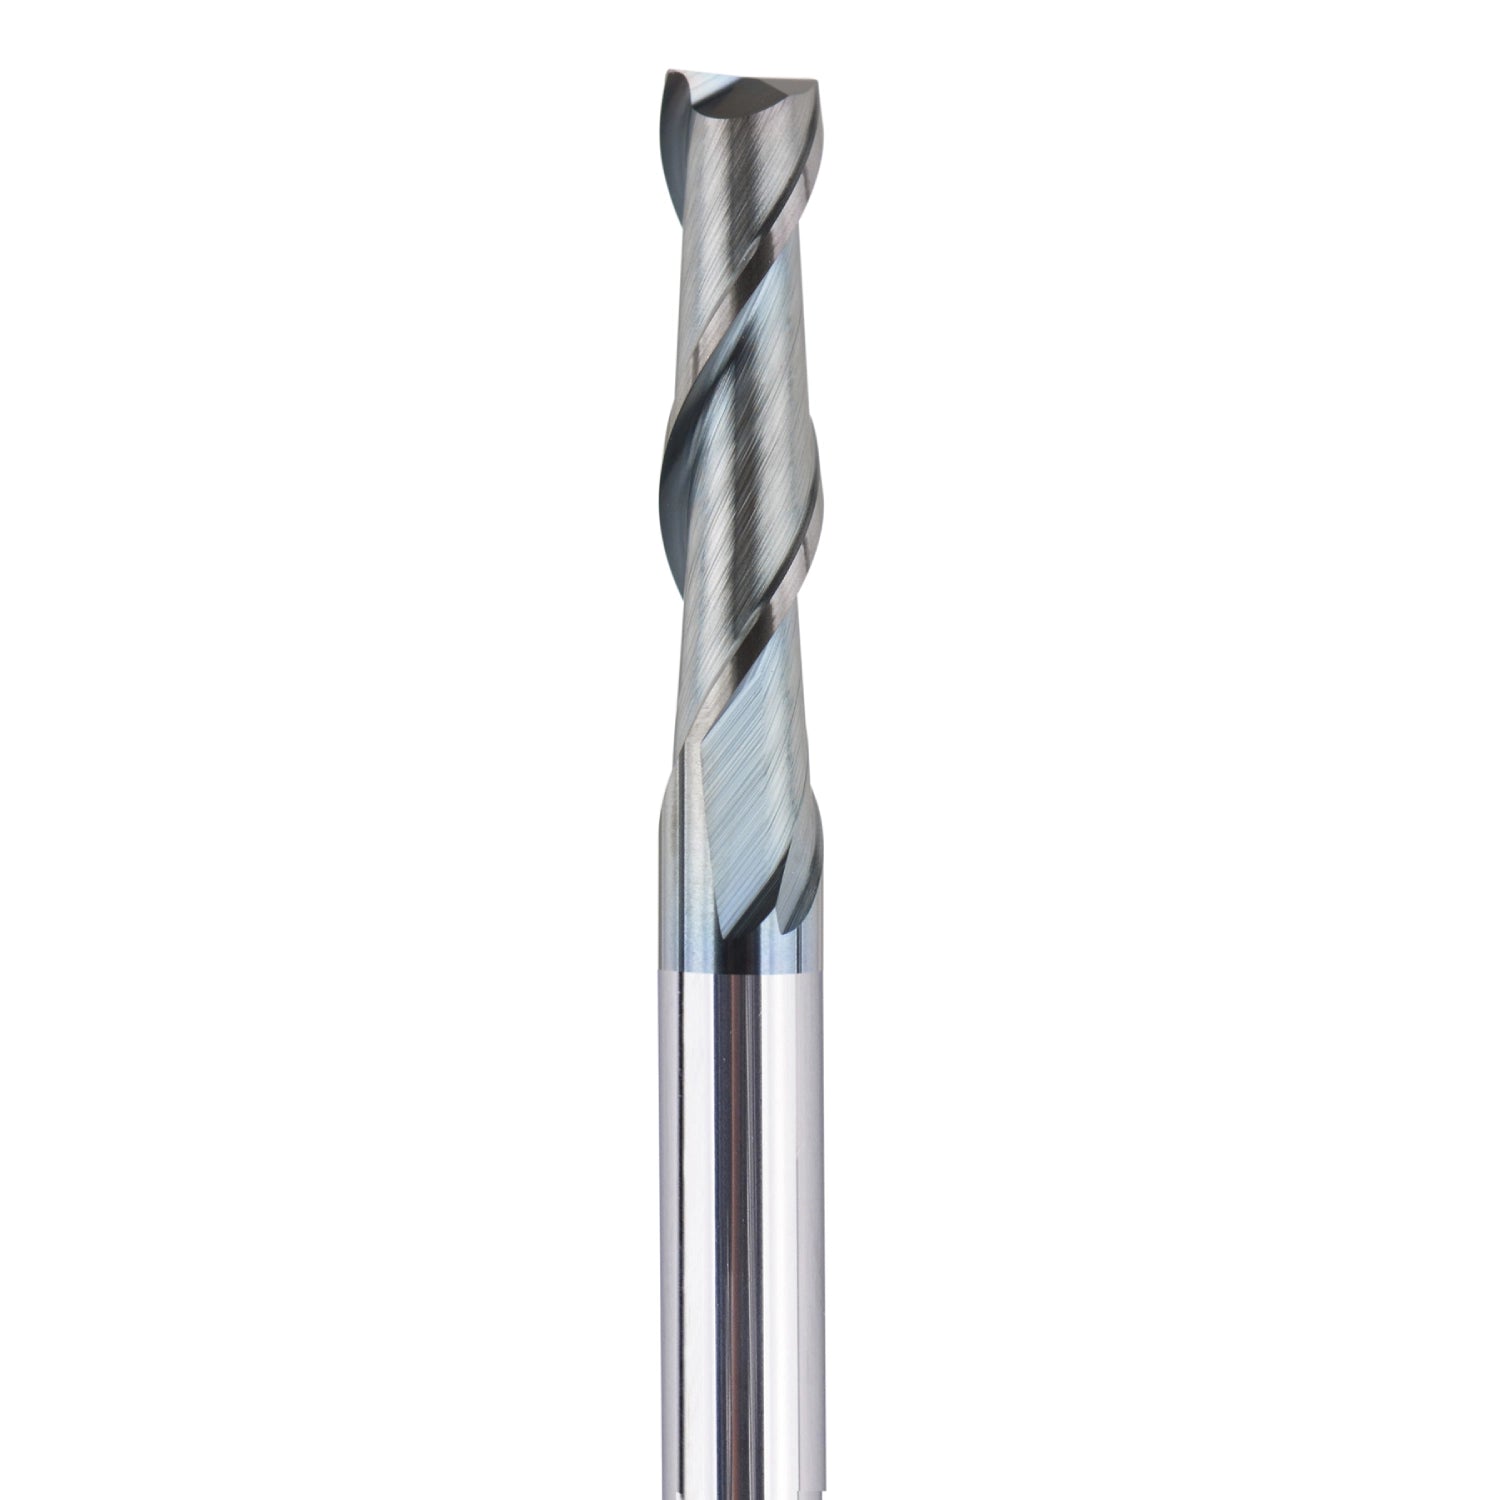 SpeTool 2 Flute 1/32 Dia 1/8 inch Shank Aluminum End Mill CNC Bits